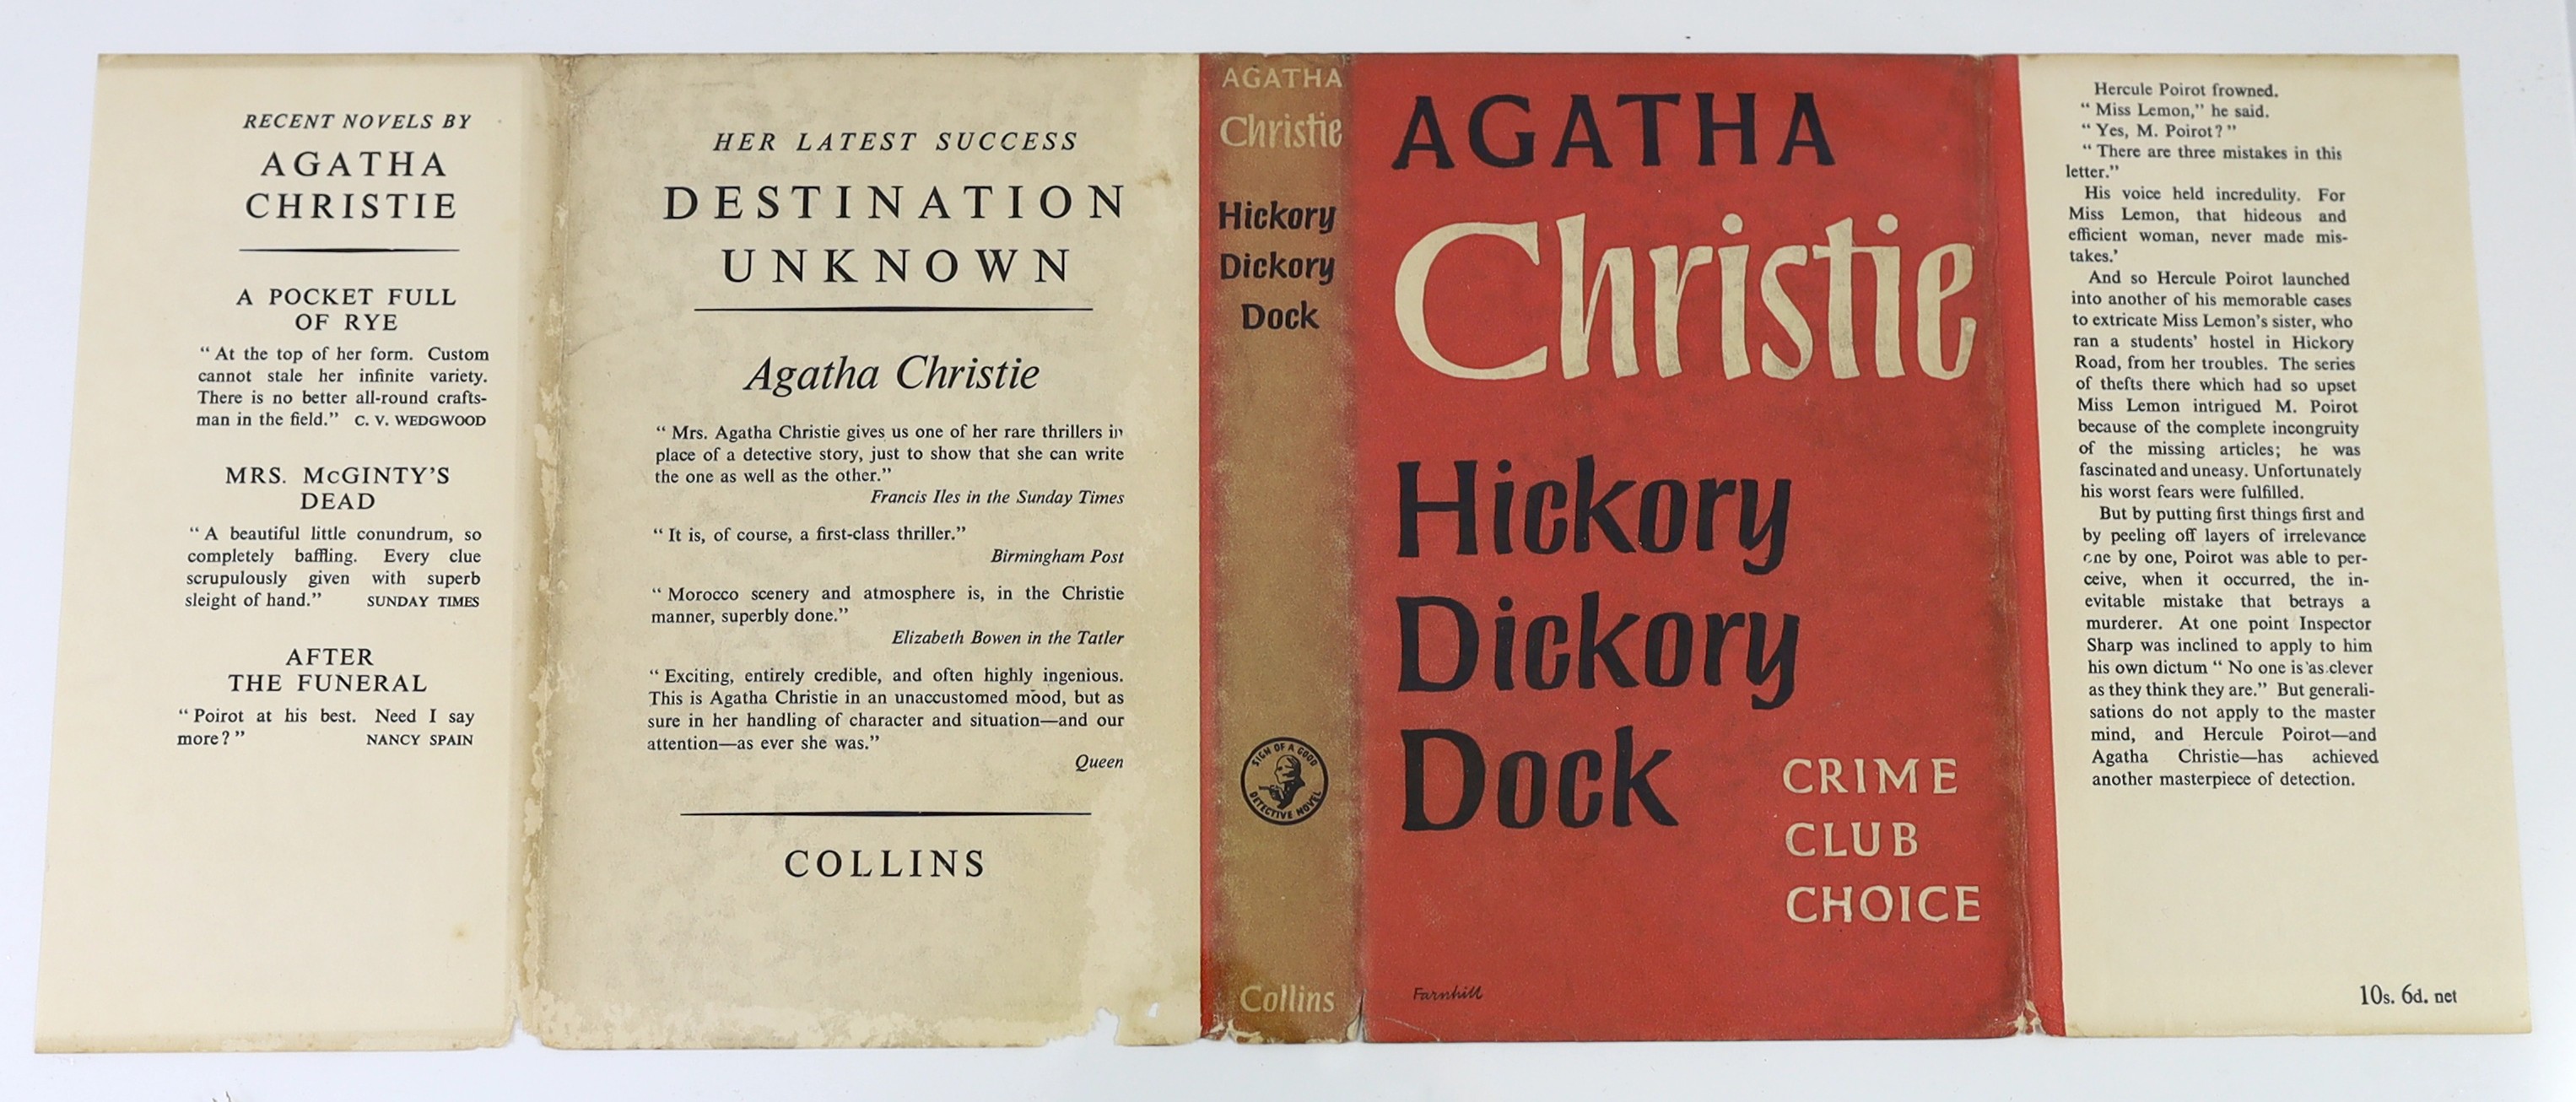 Christie, Agatha - Hickory Dickory Dock, 1st edition